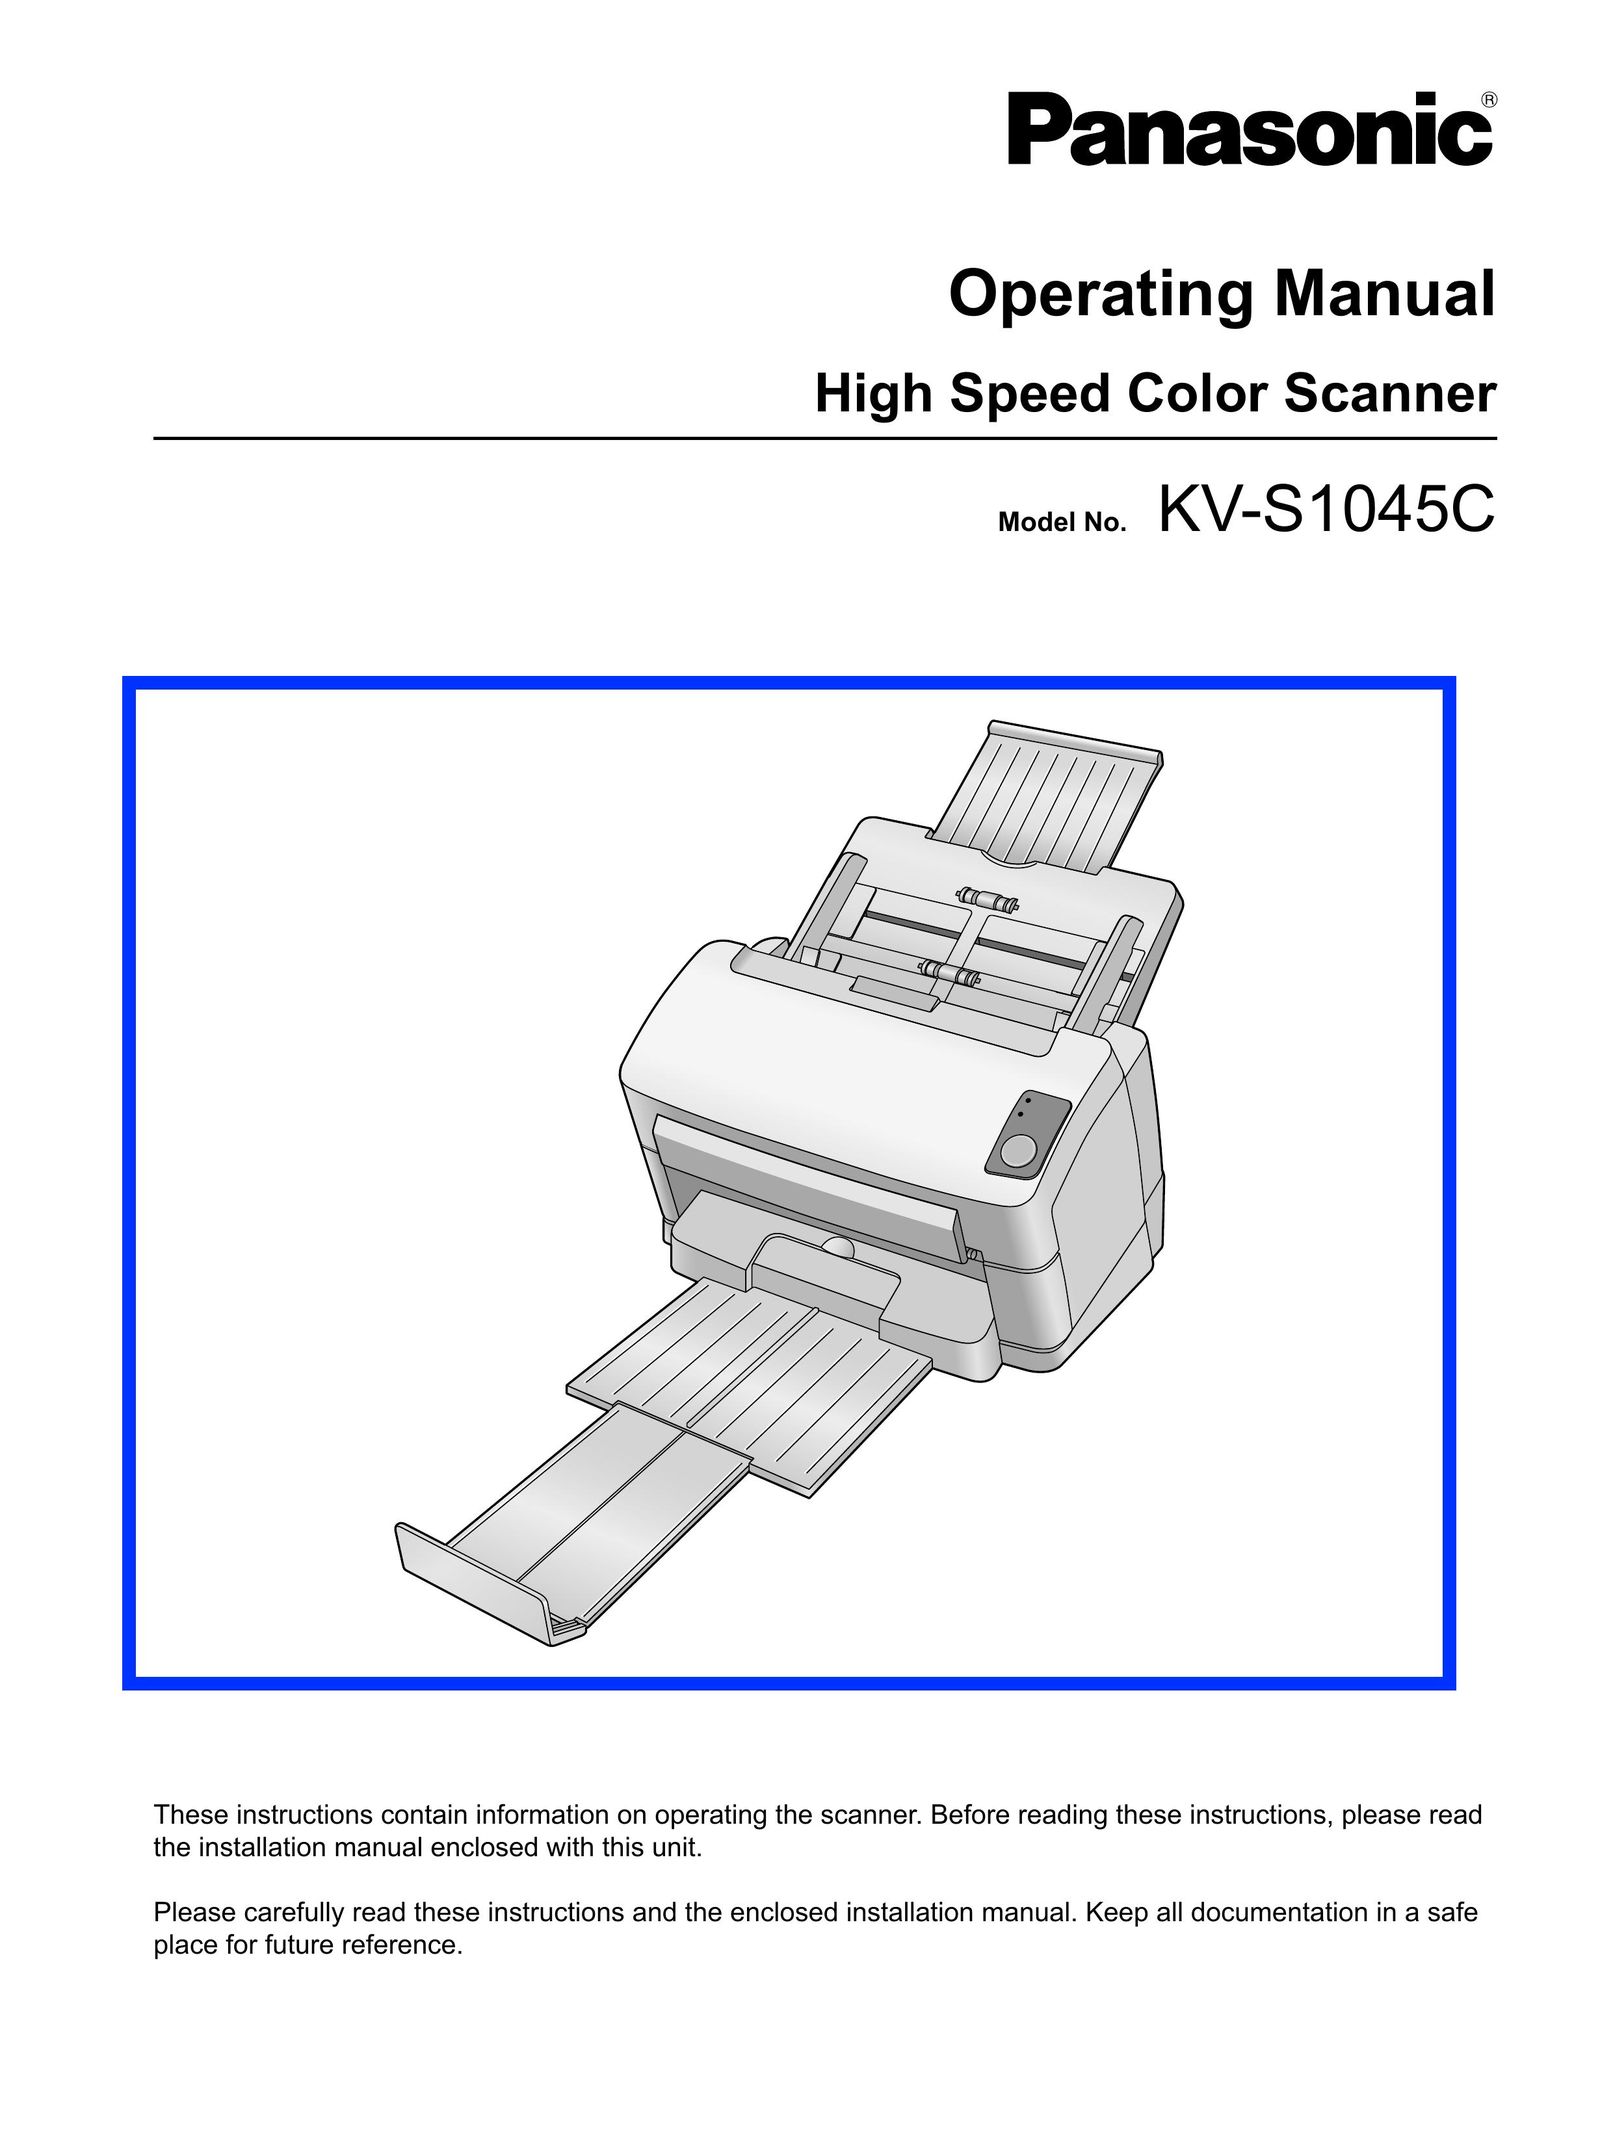 Panasonic KV-S1045C Scanner User Manual